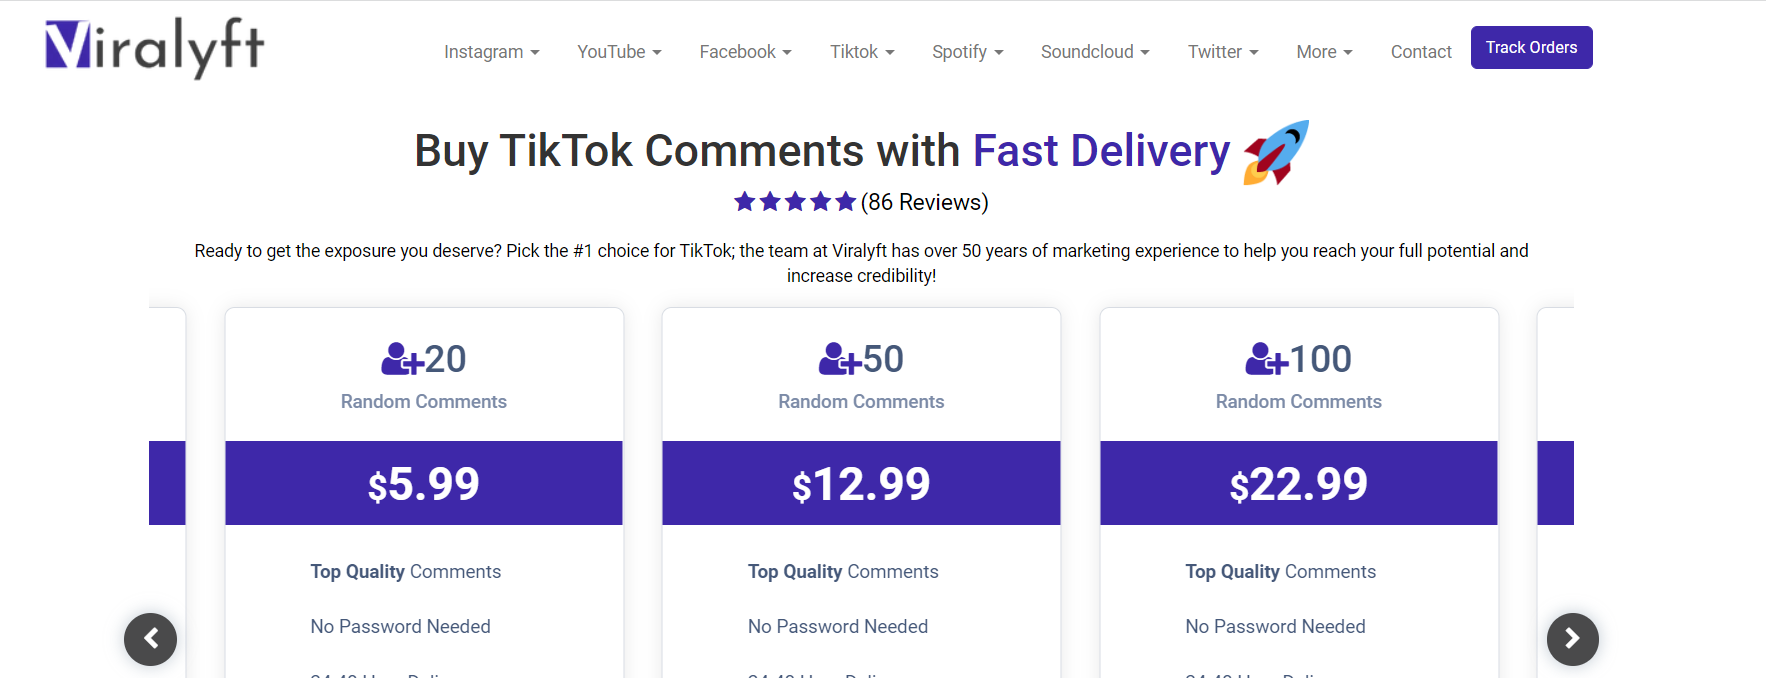 How Many Followers Do You Need on TikTok To Get Paid? - Viralyft